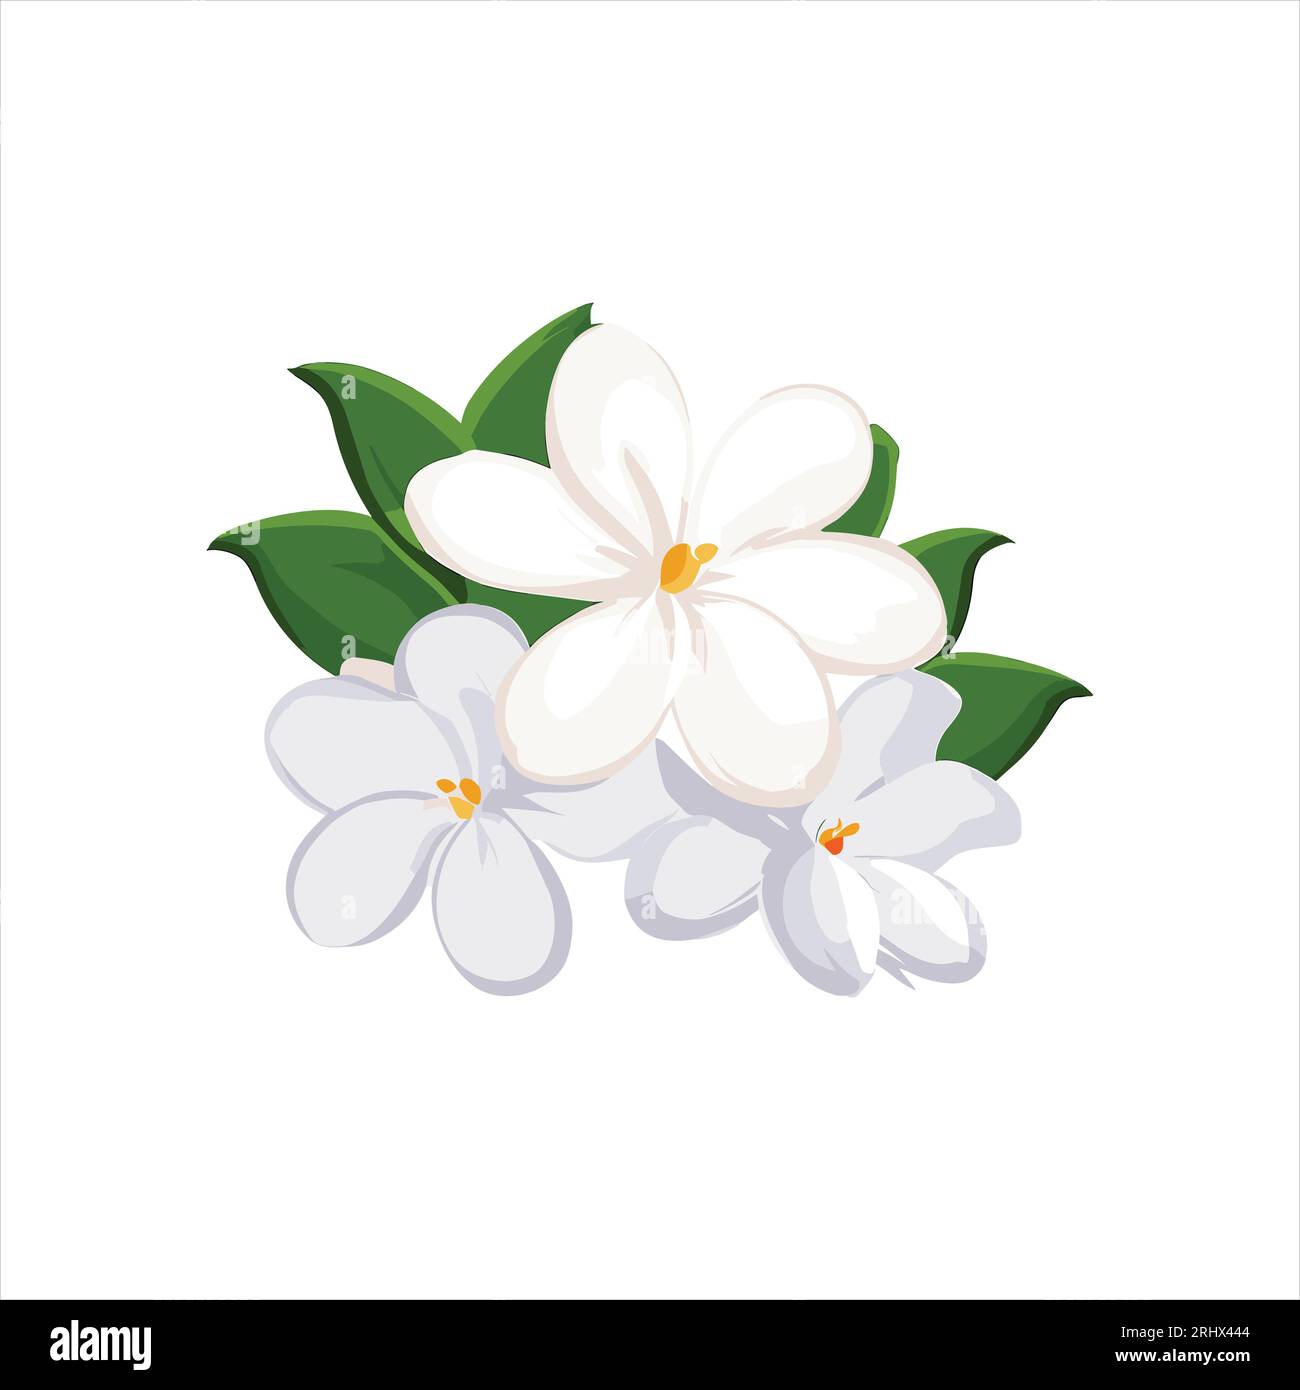 Clipart vector illustration of Jasminer flowers Stock Vector